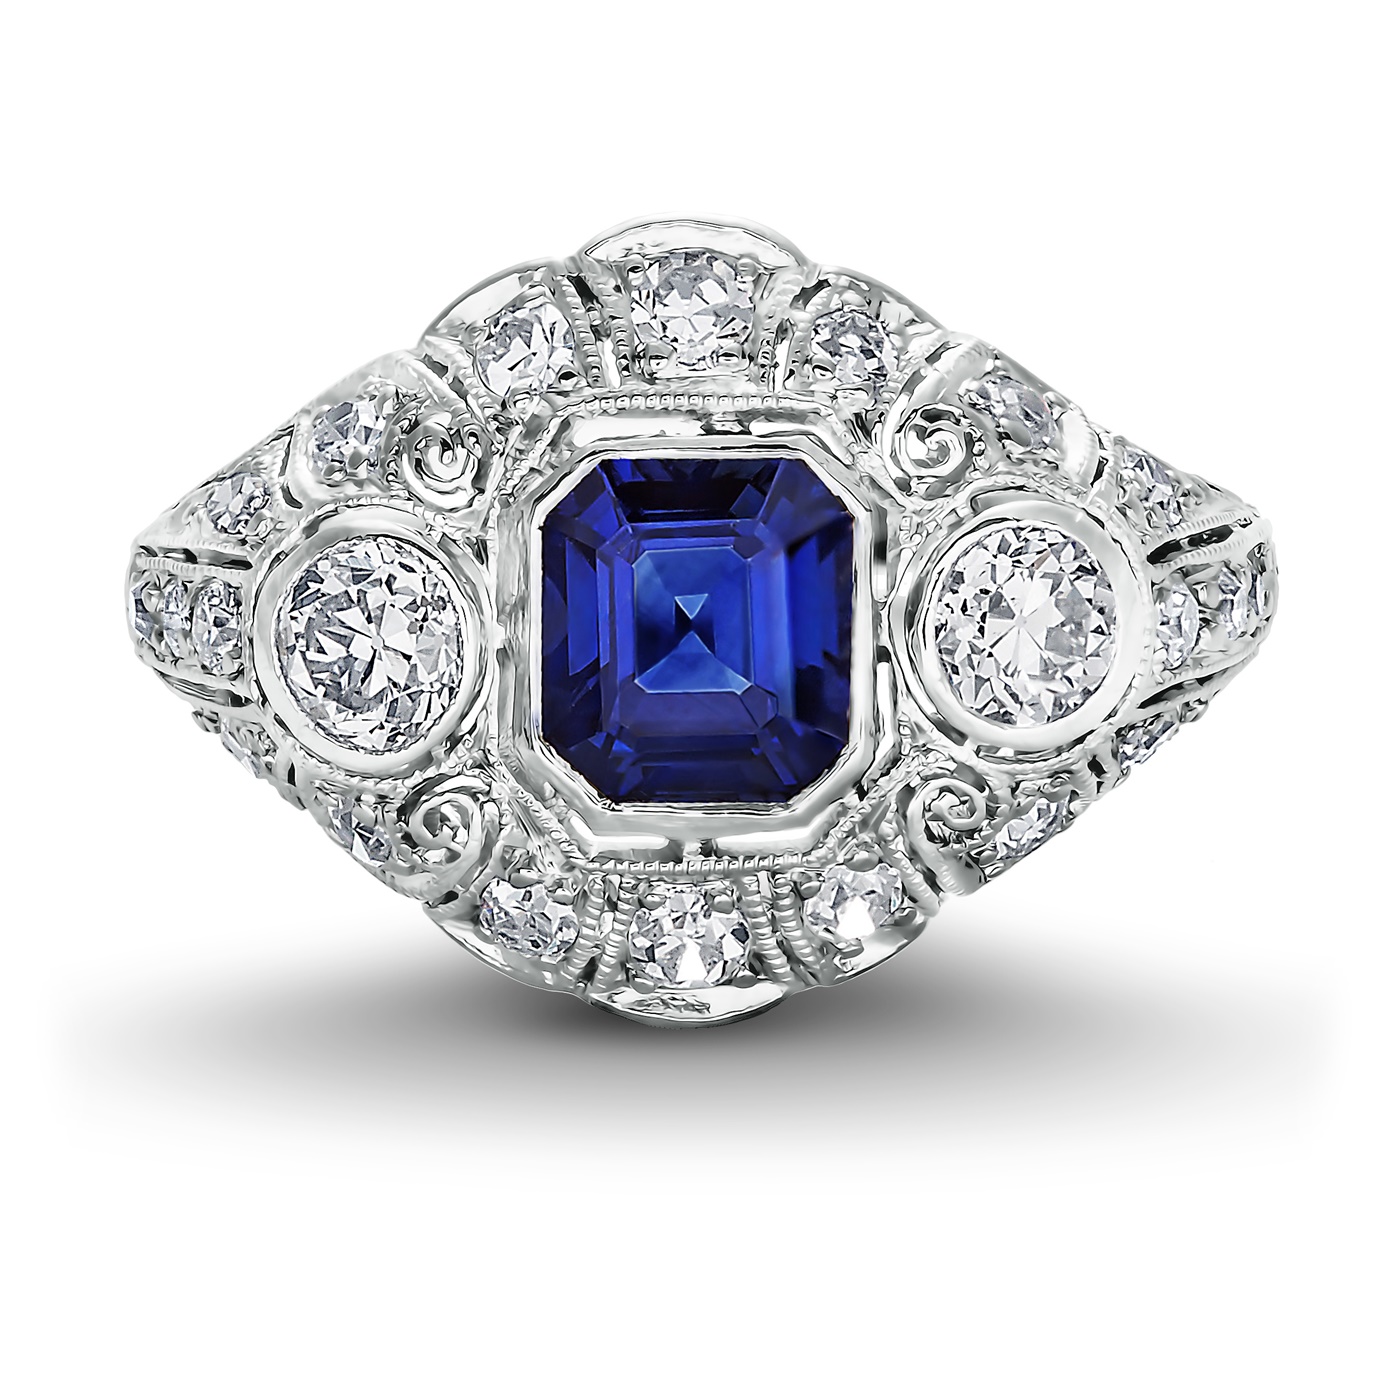 Vintage Asscher Cut Sapphire Ring - Antique Sapphire and Diamond Ring